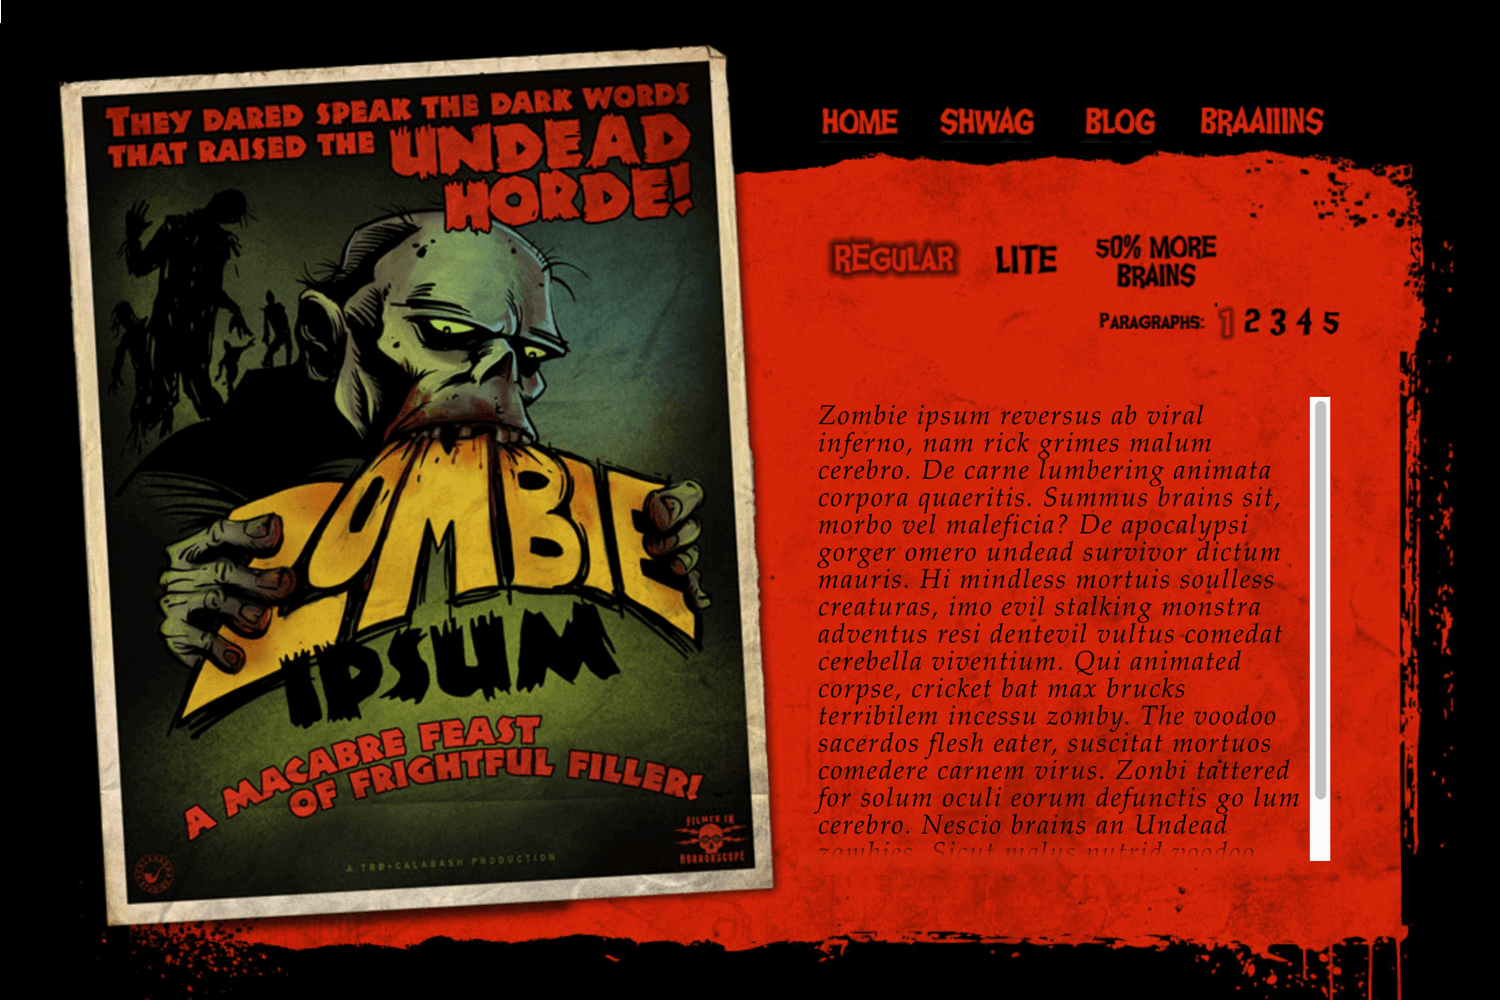 zombie ipsum as entertaining filler text